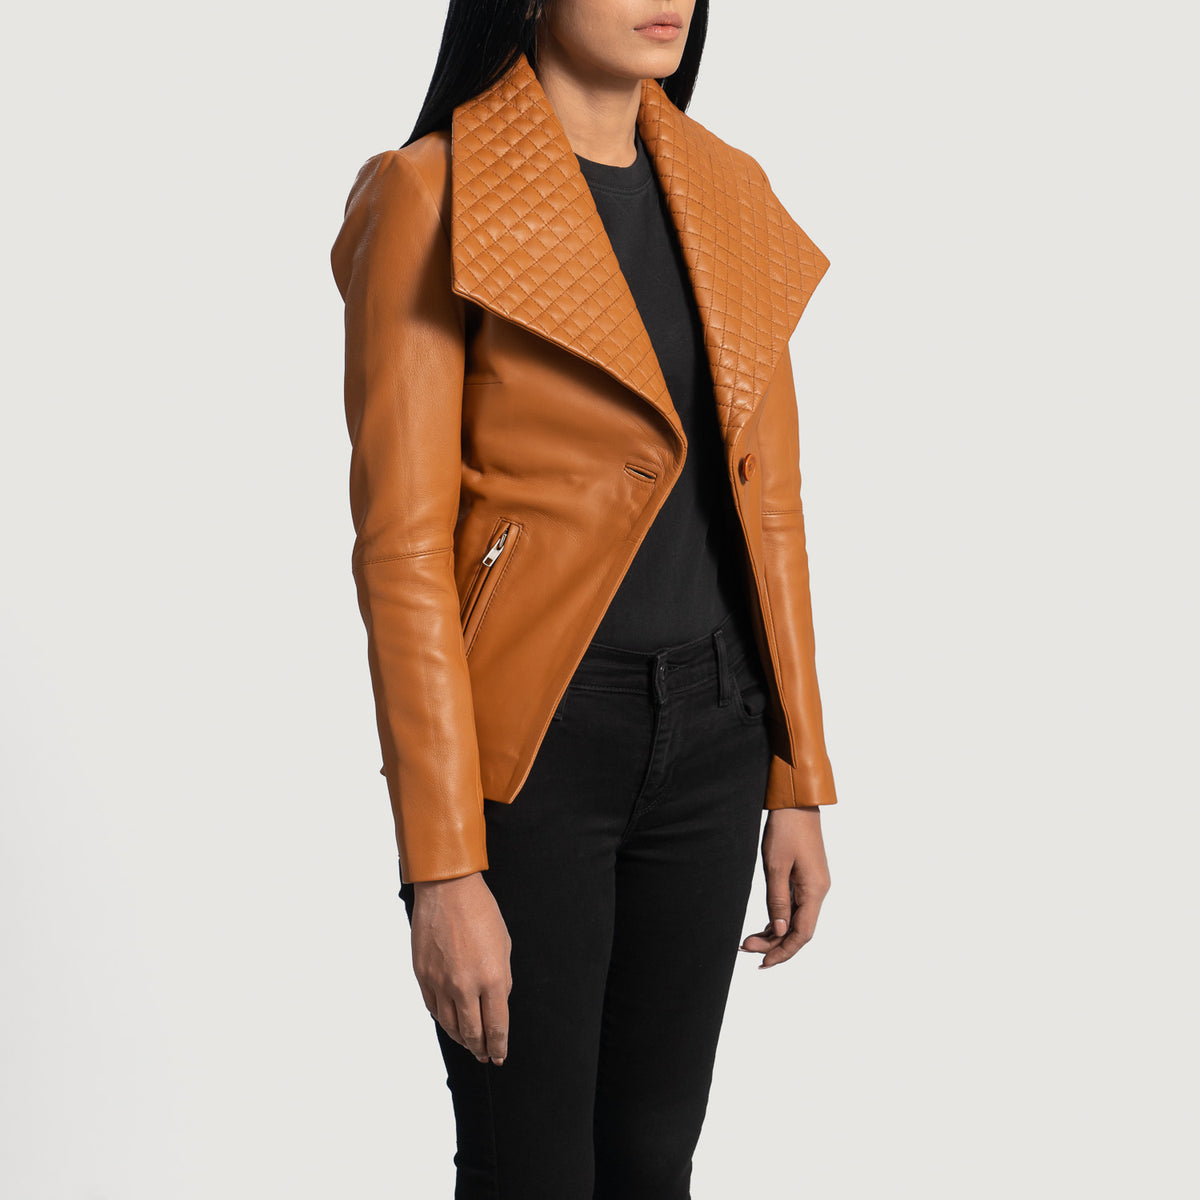 Ace Tan Brown Leather Blazer Plus Size